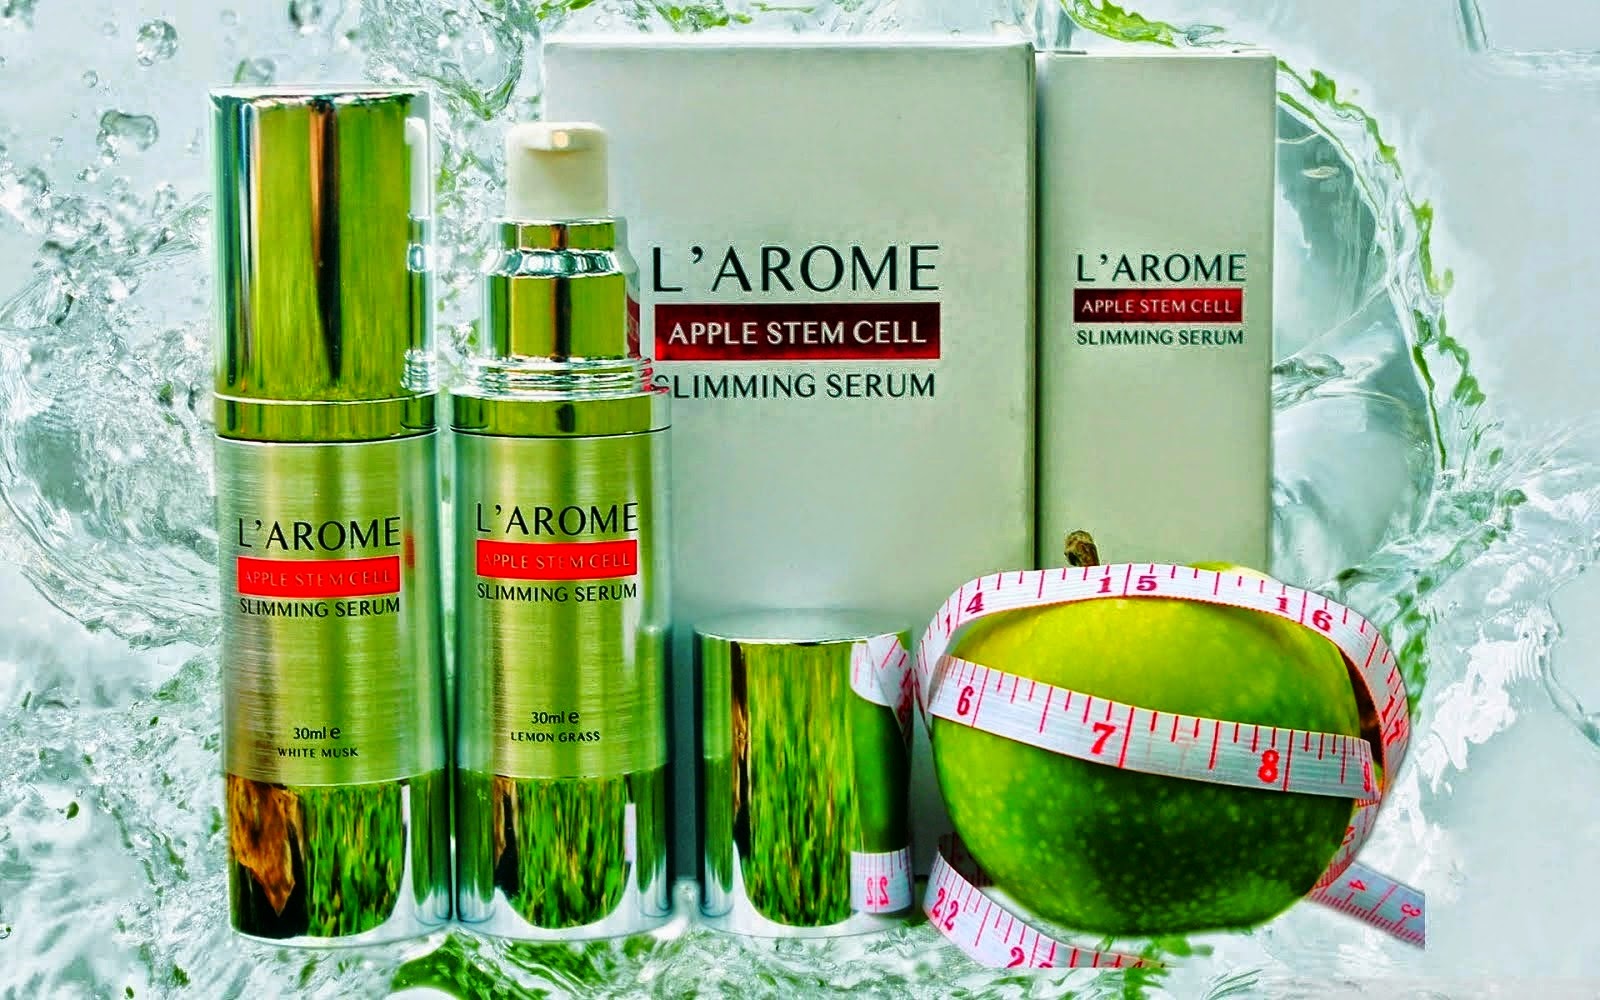 Larome Apple Stem Cell Slimming Serum